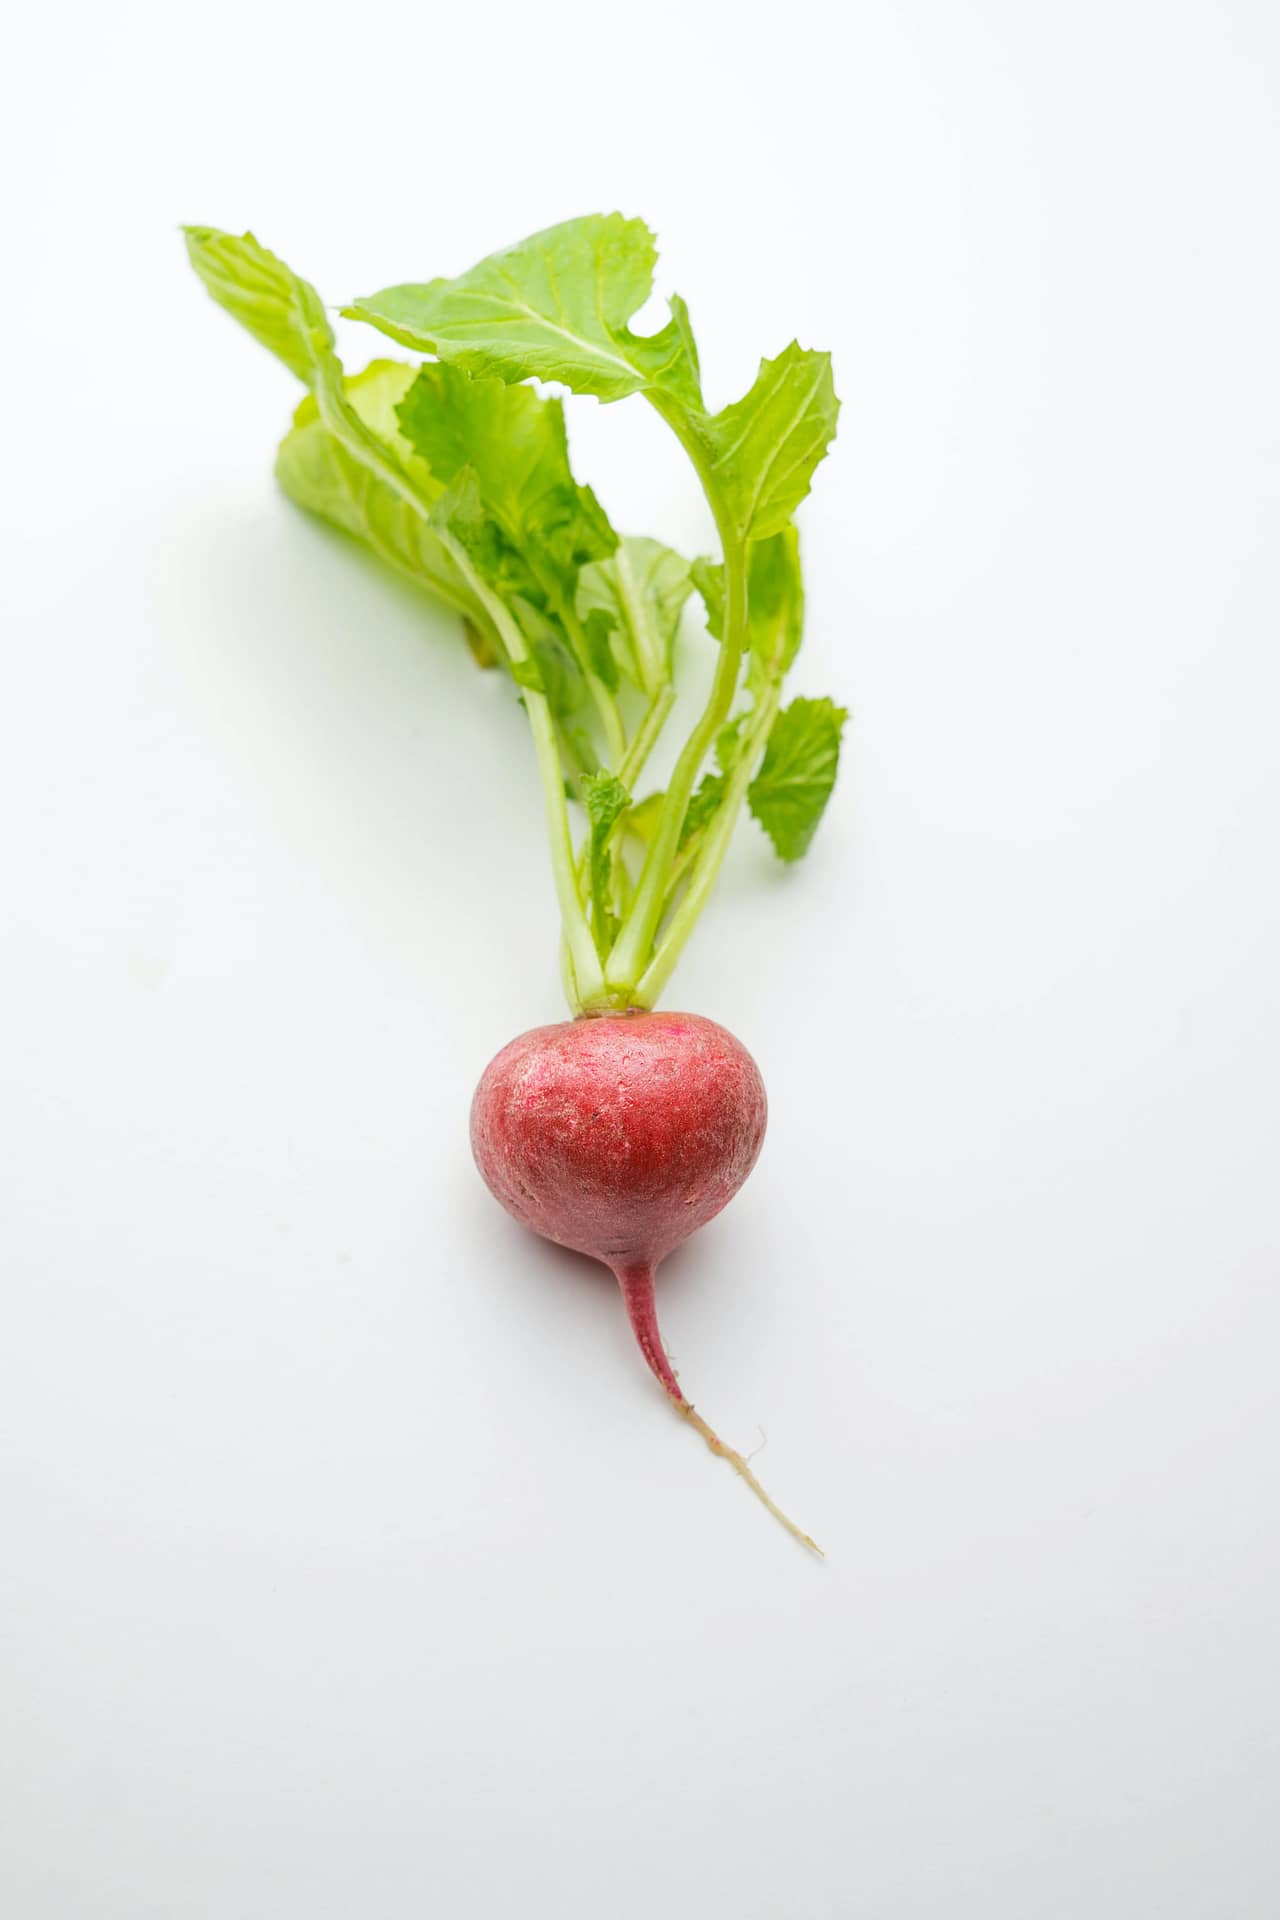 single radish with stem